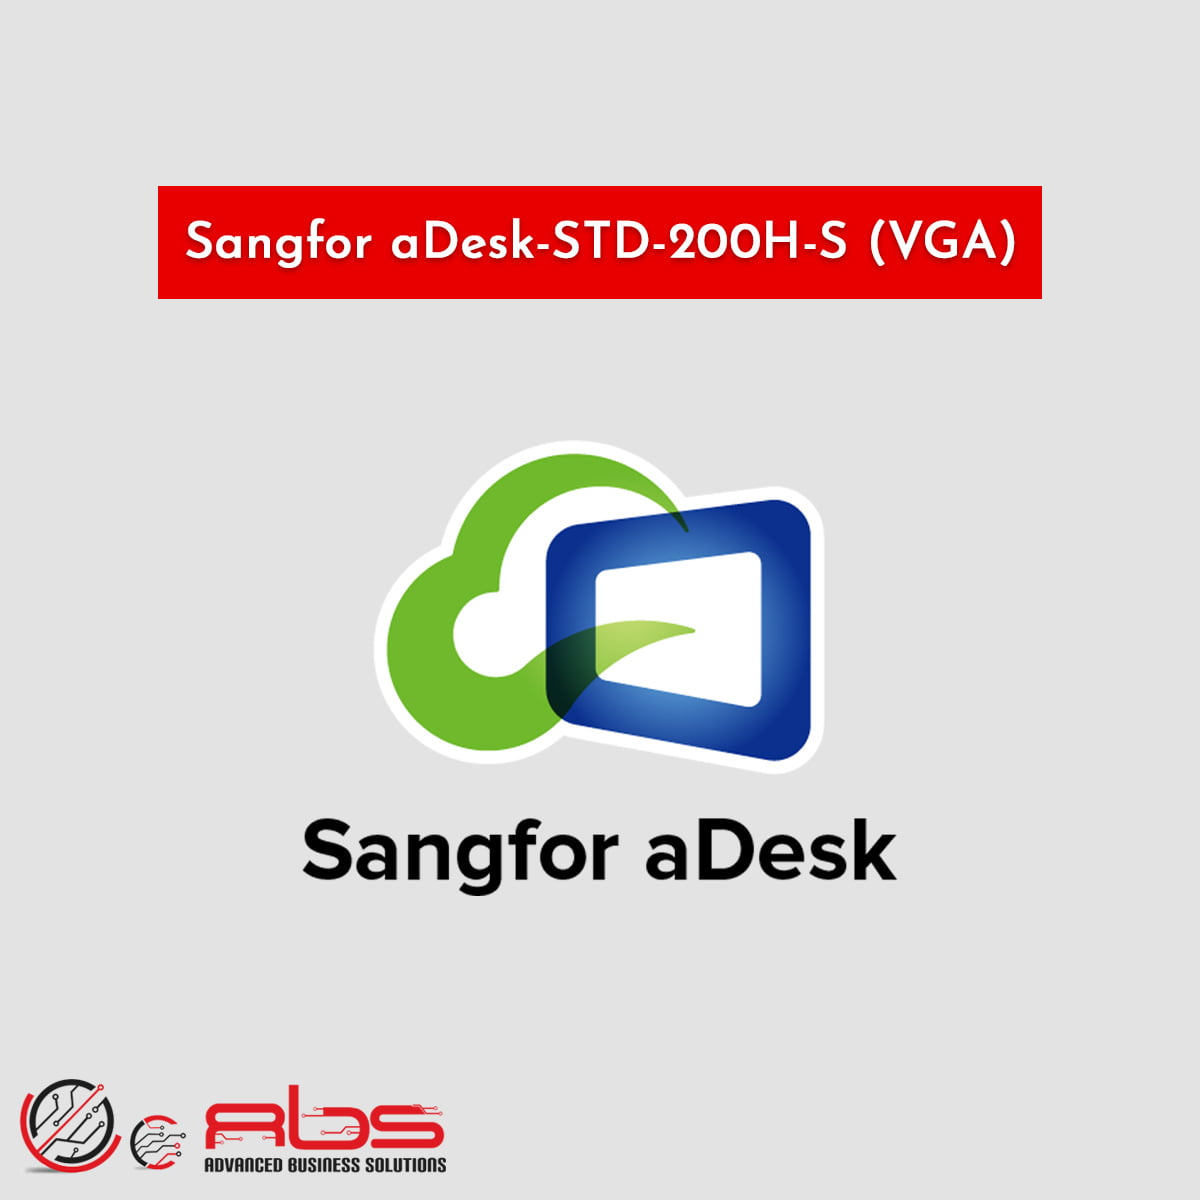 Sangfor aDesk-STD-200H-S (VGA)